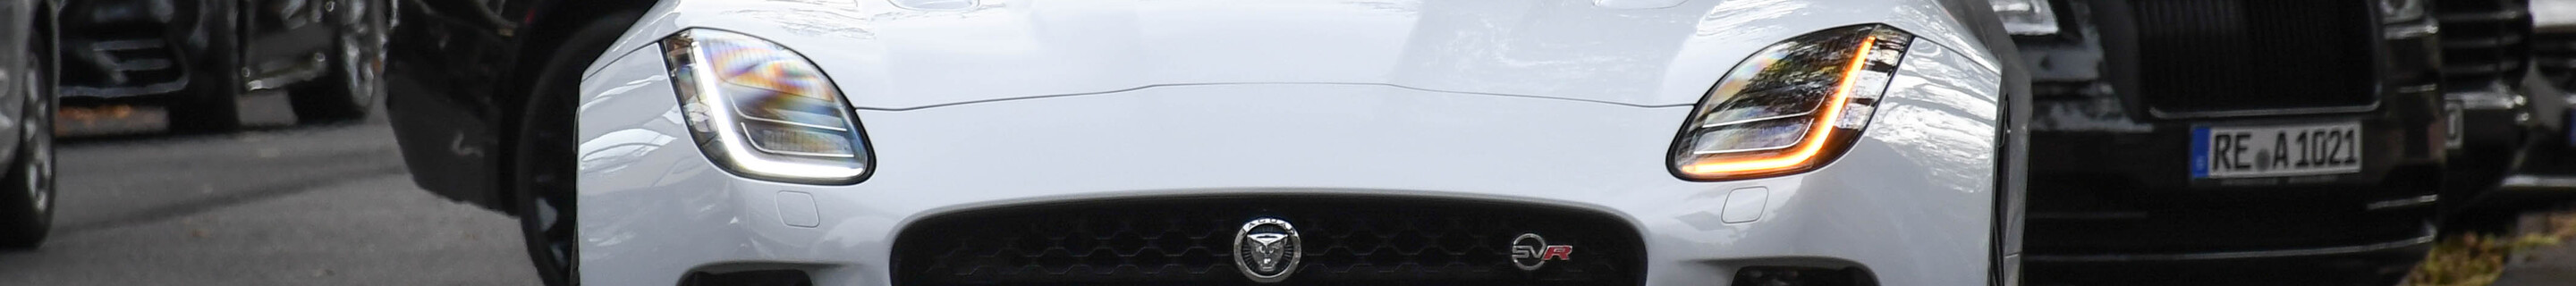 Jaguar F-TYPE SVR Convertible 2017